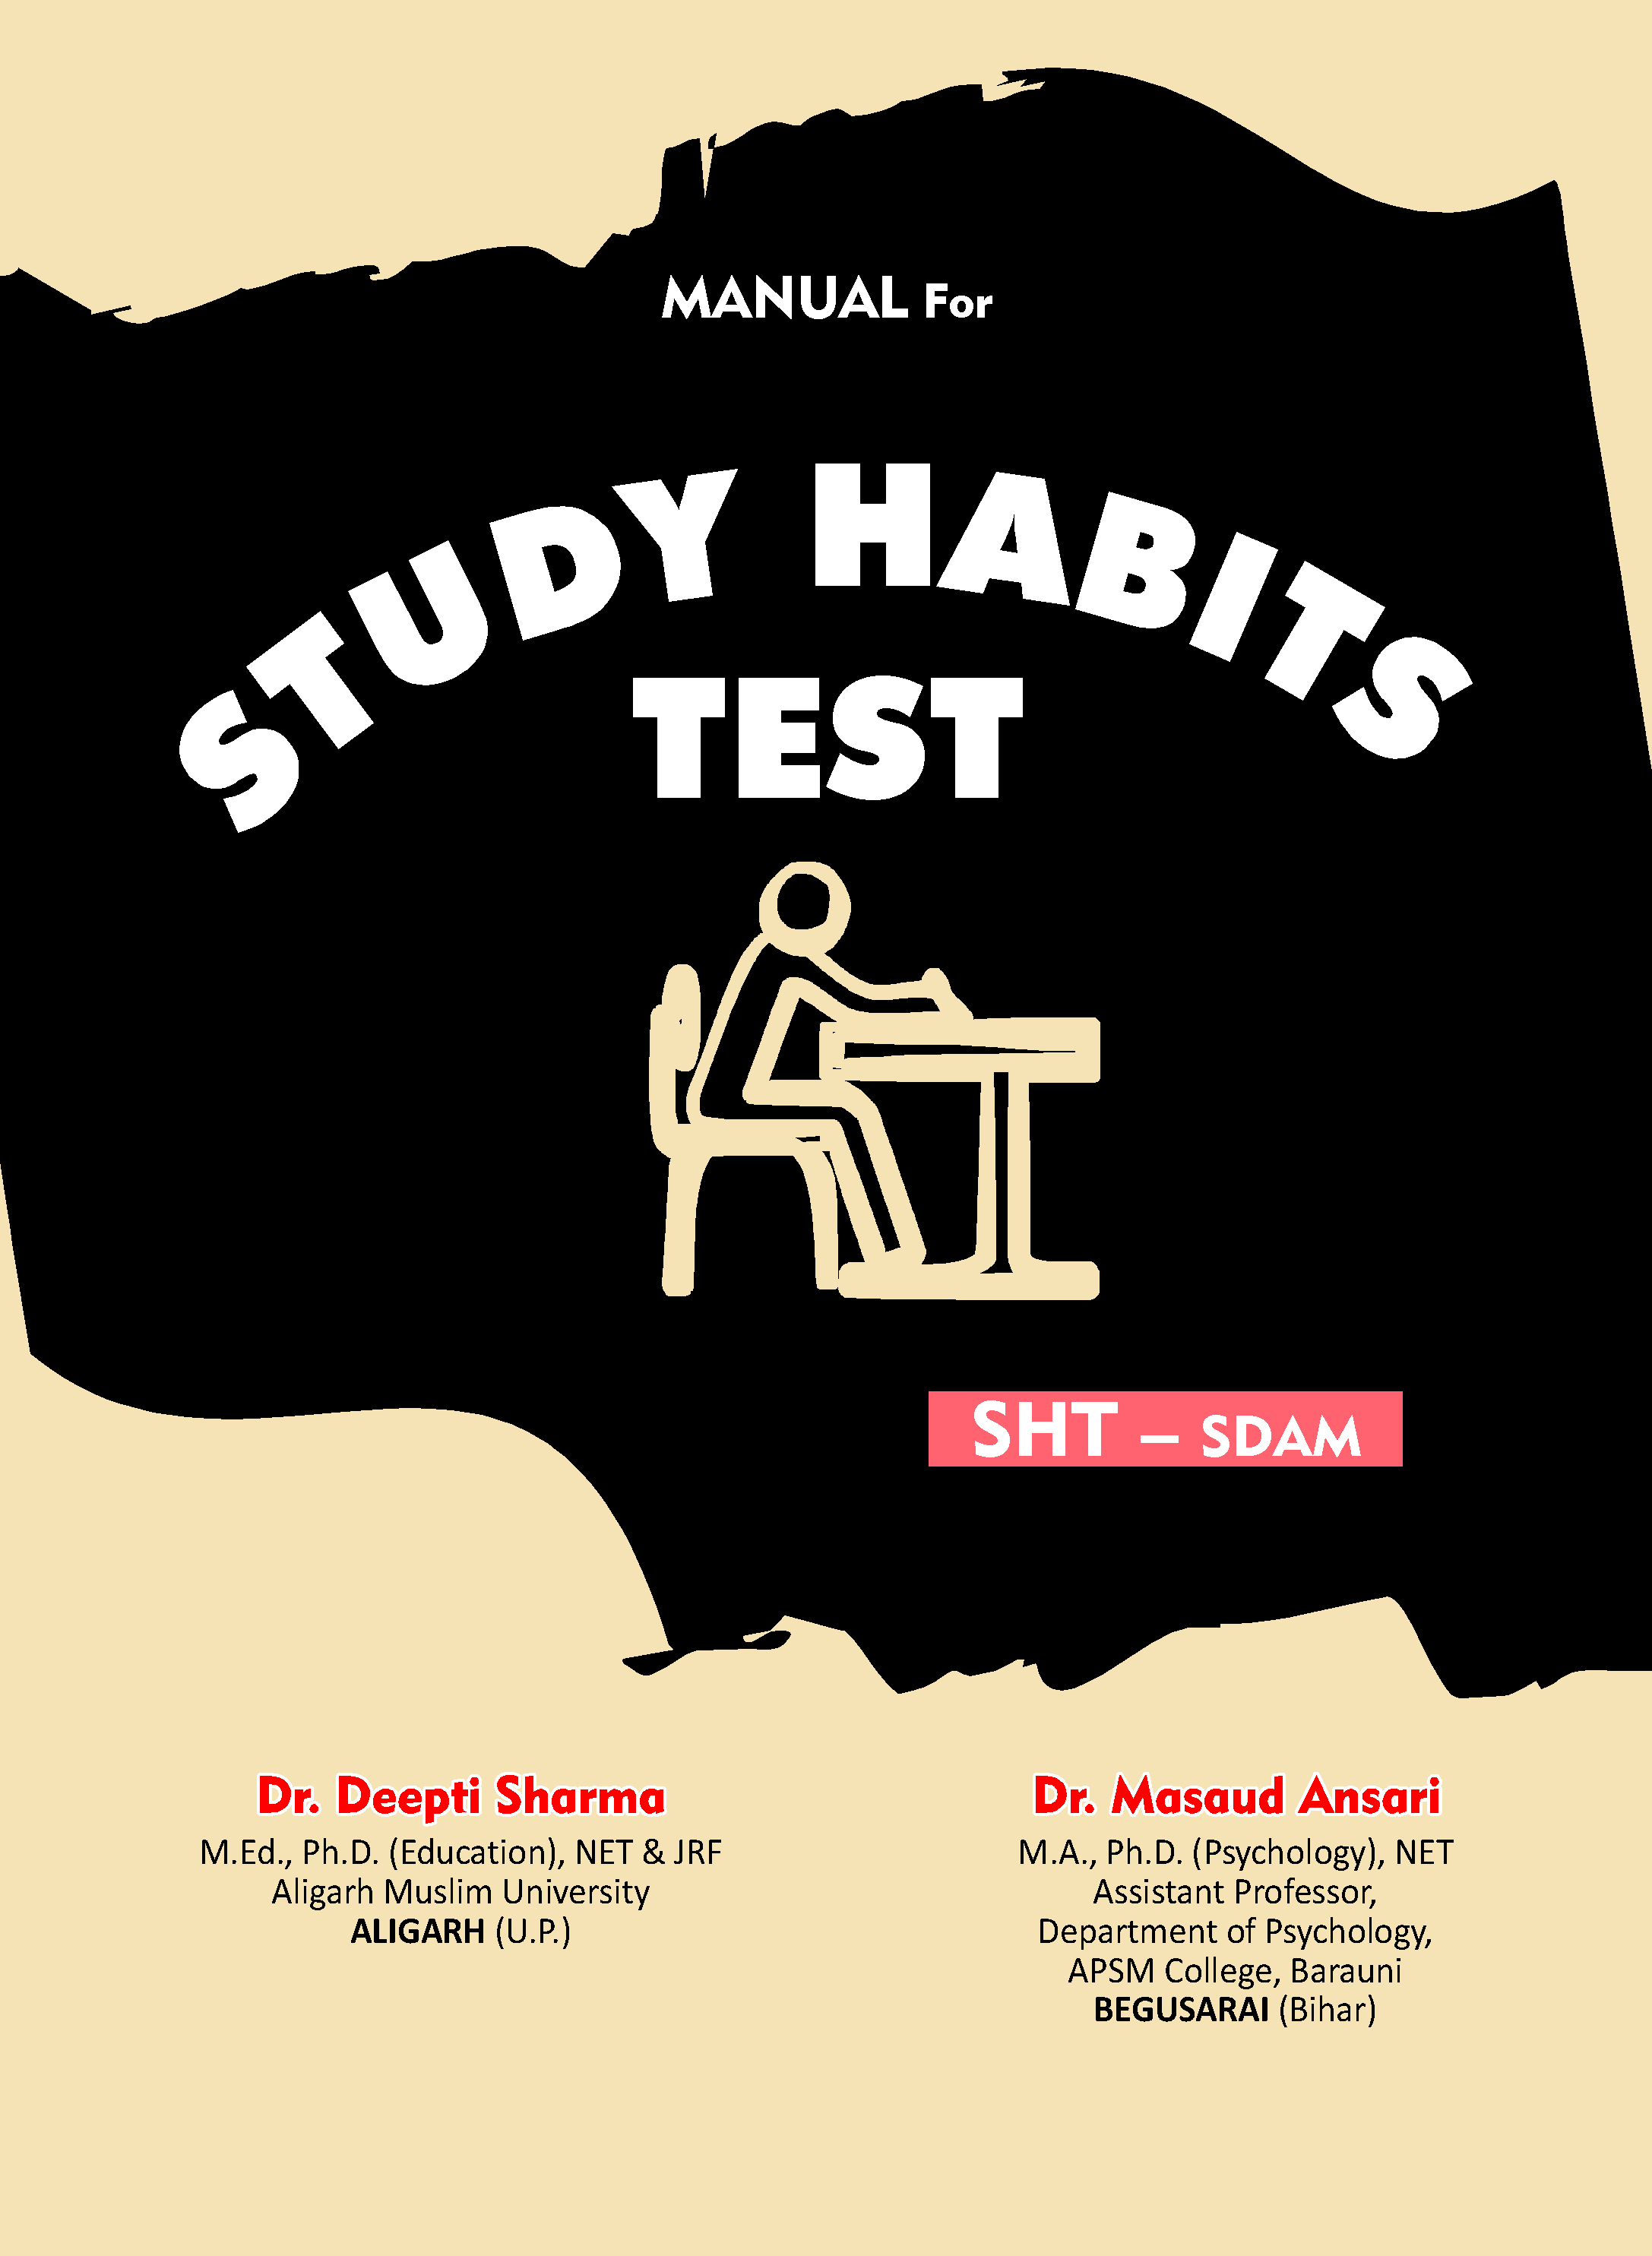 STUDY-HABITS-TEST